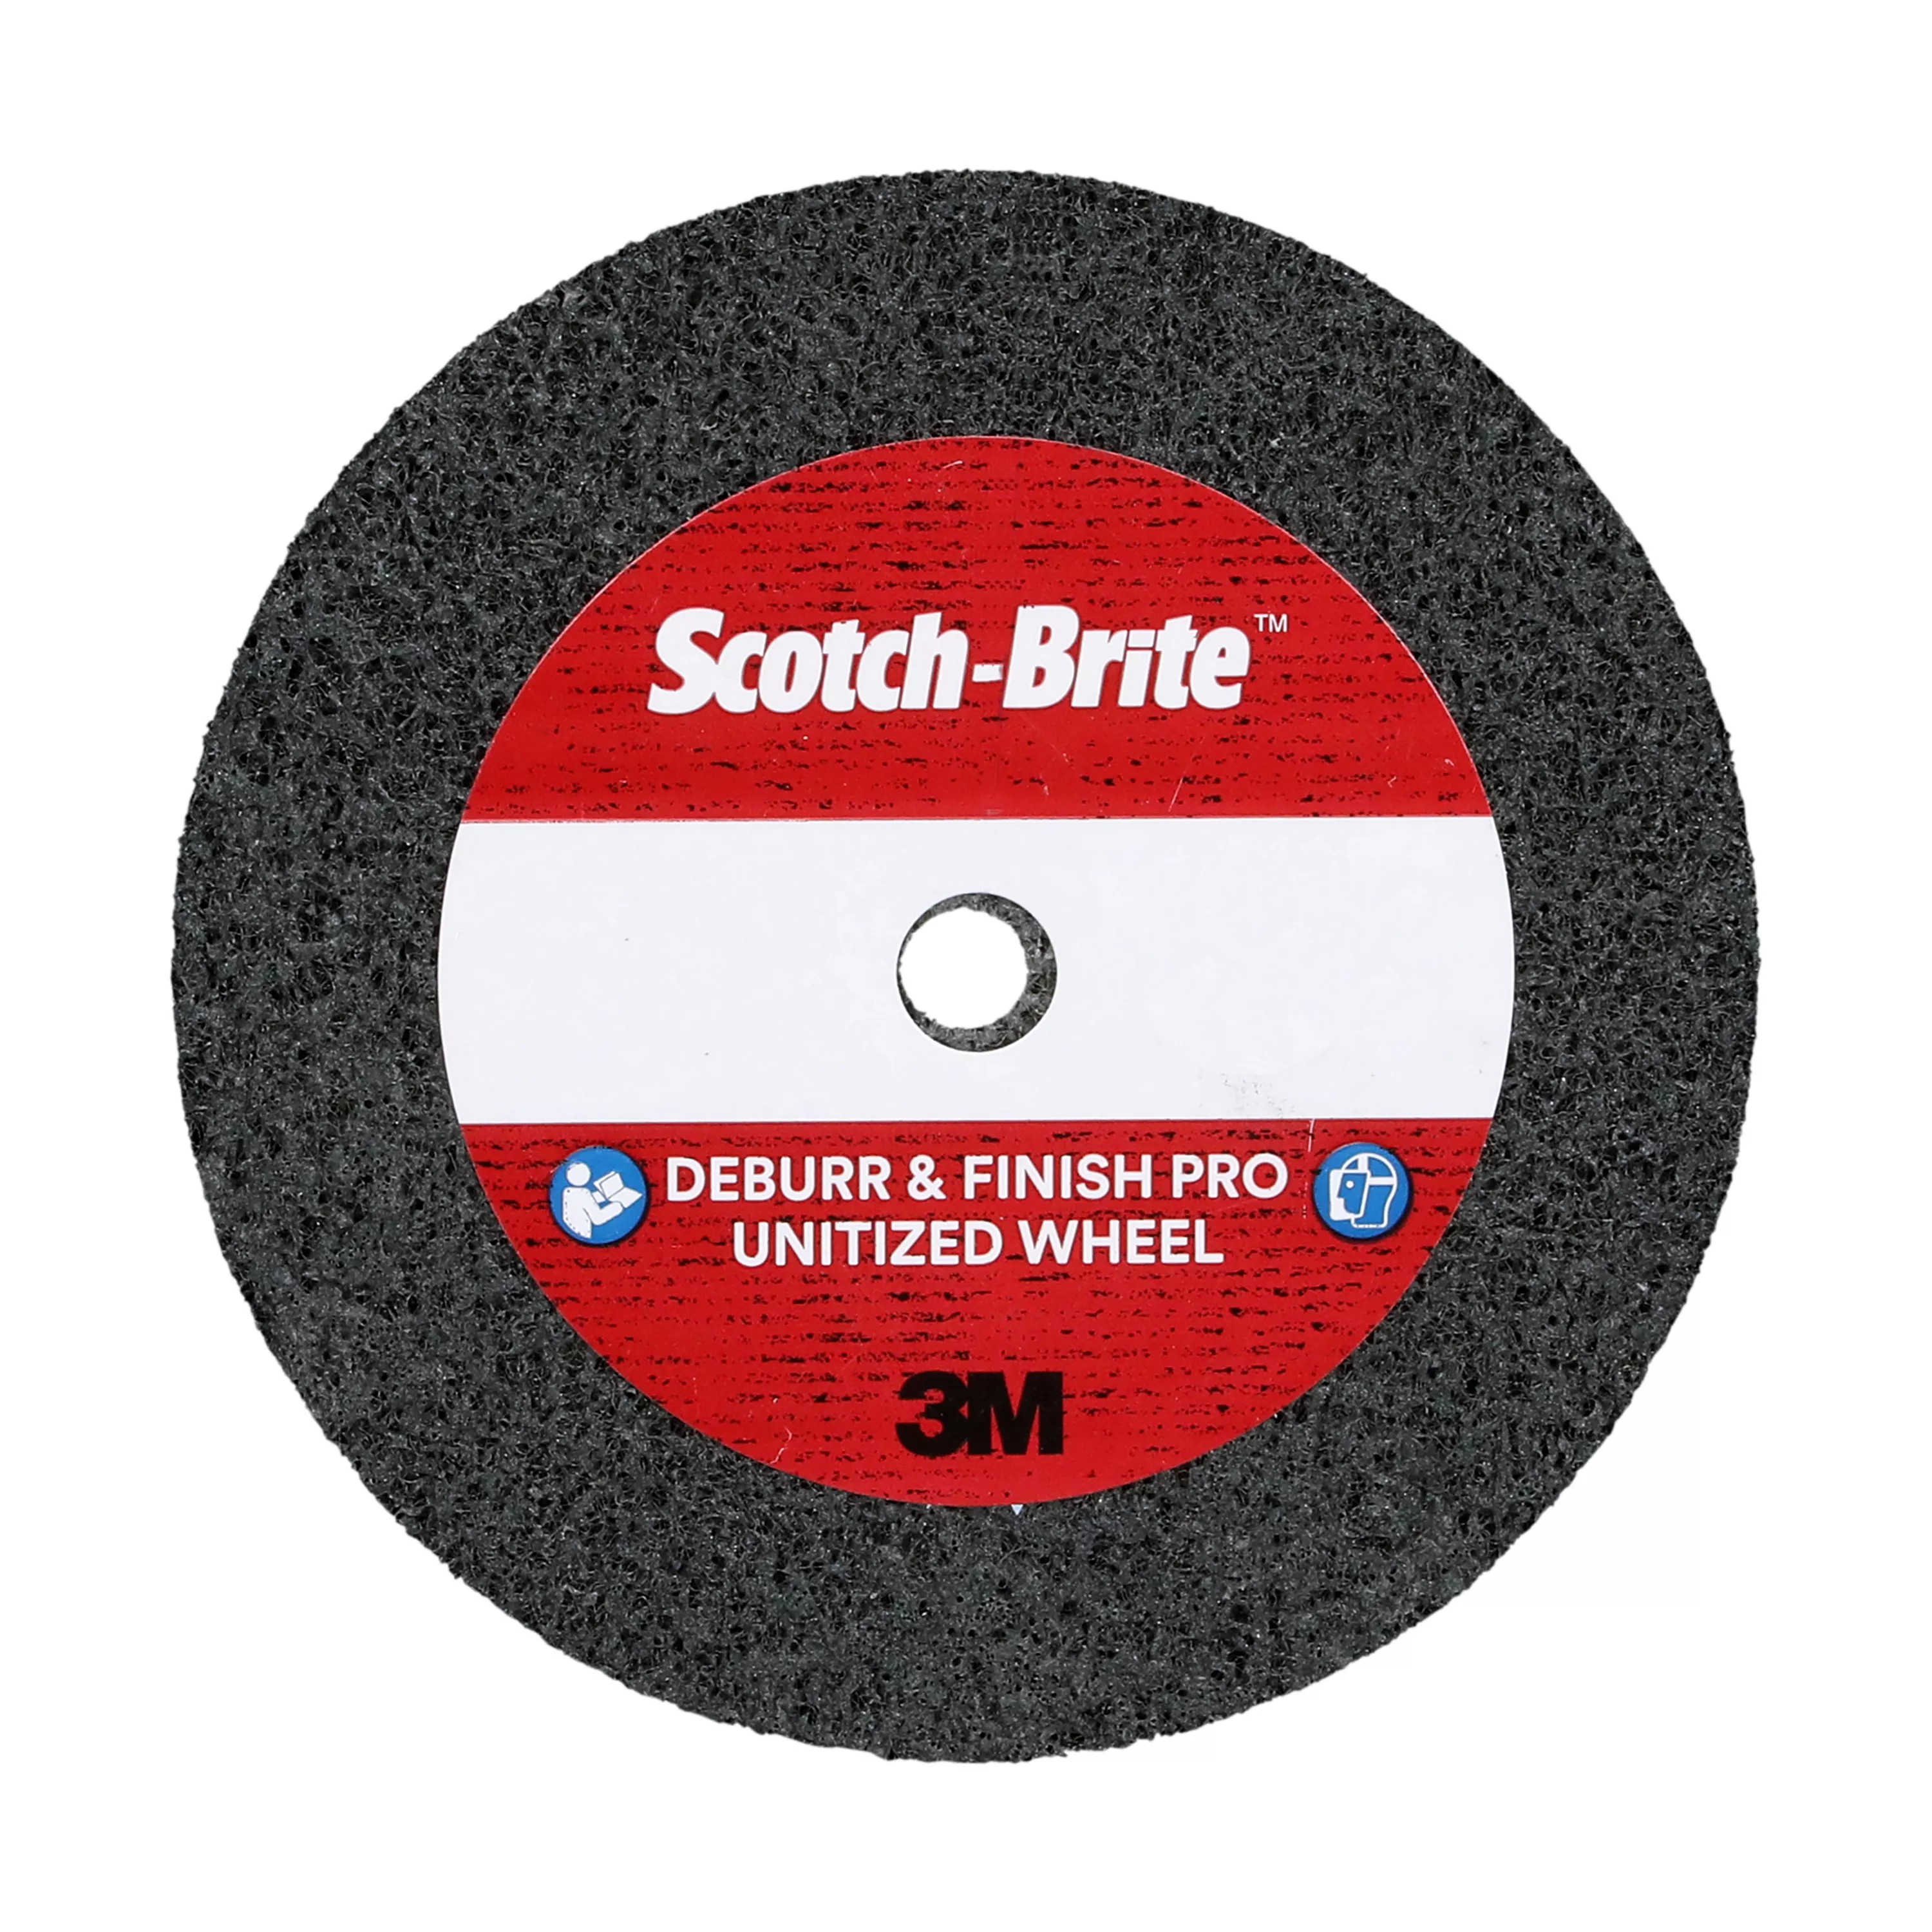 SKU 7100143461 | Scotch-Brite™ Deburr & Finish Pro Unitized Wheel